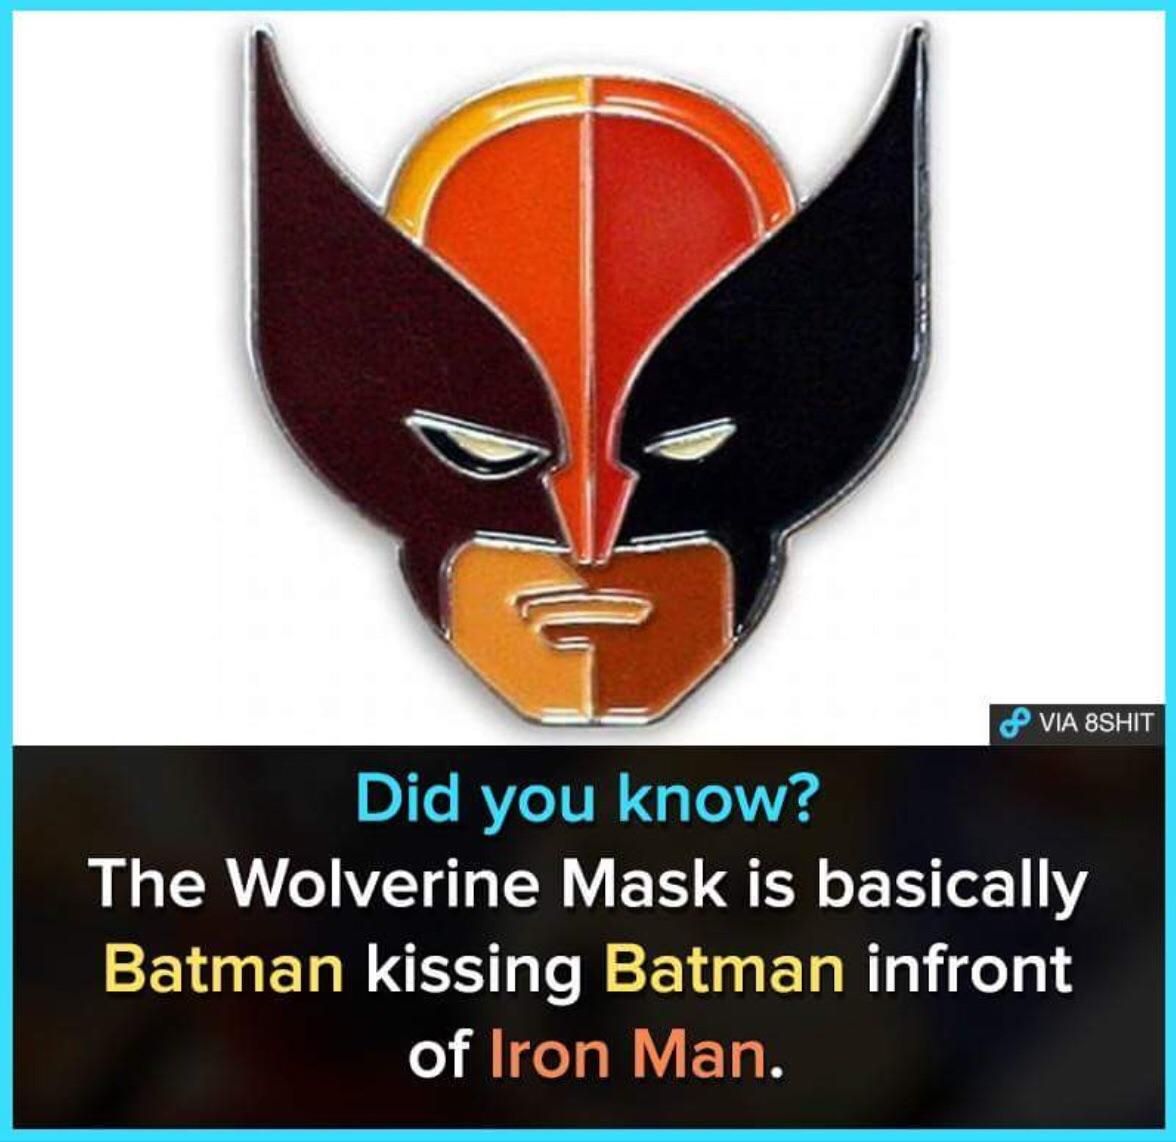 Wolverine’s Mask